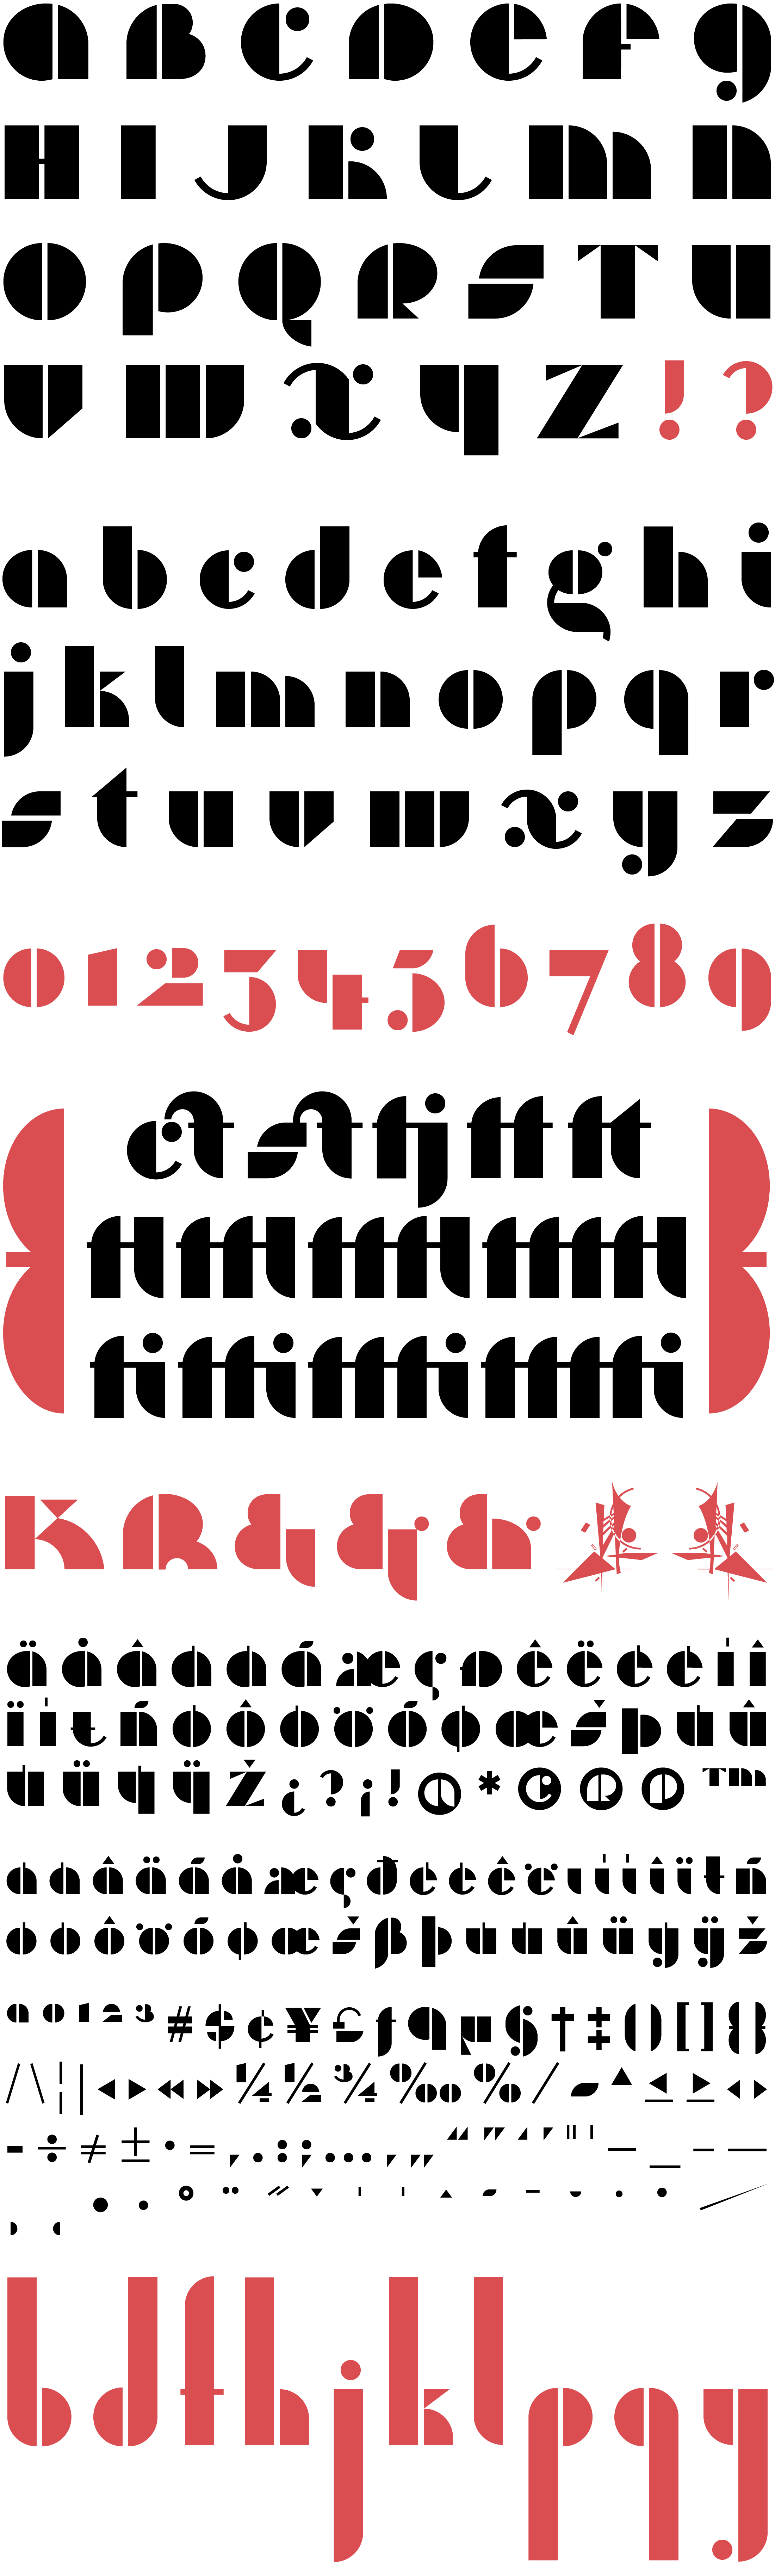 Jeanne Moderno Geometrique Character Set